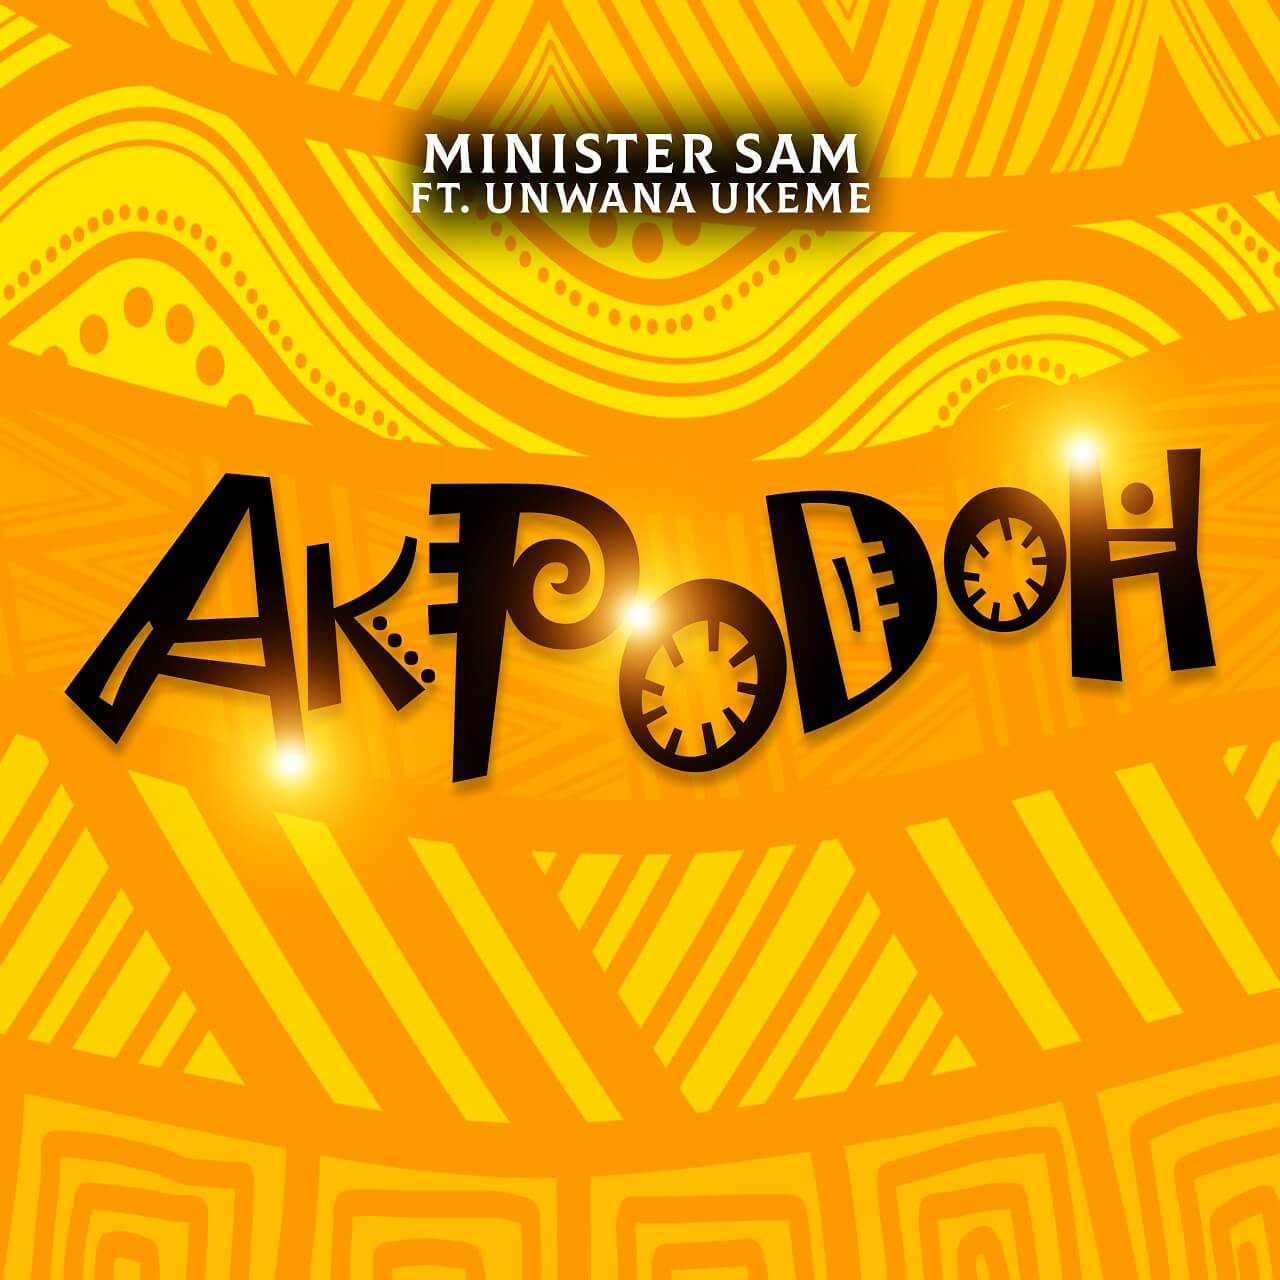  Akpodoh-By-Minister-Sam